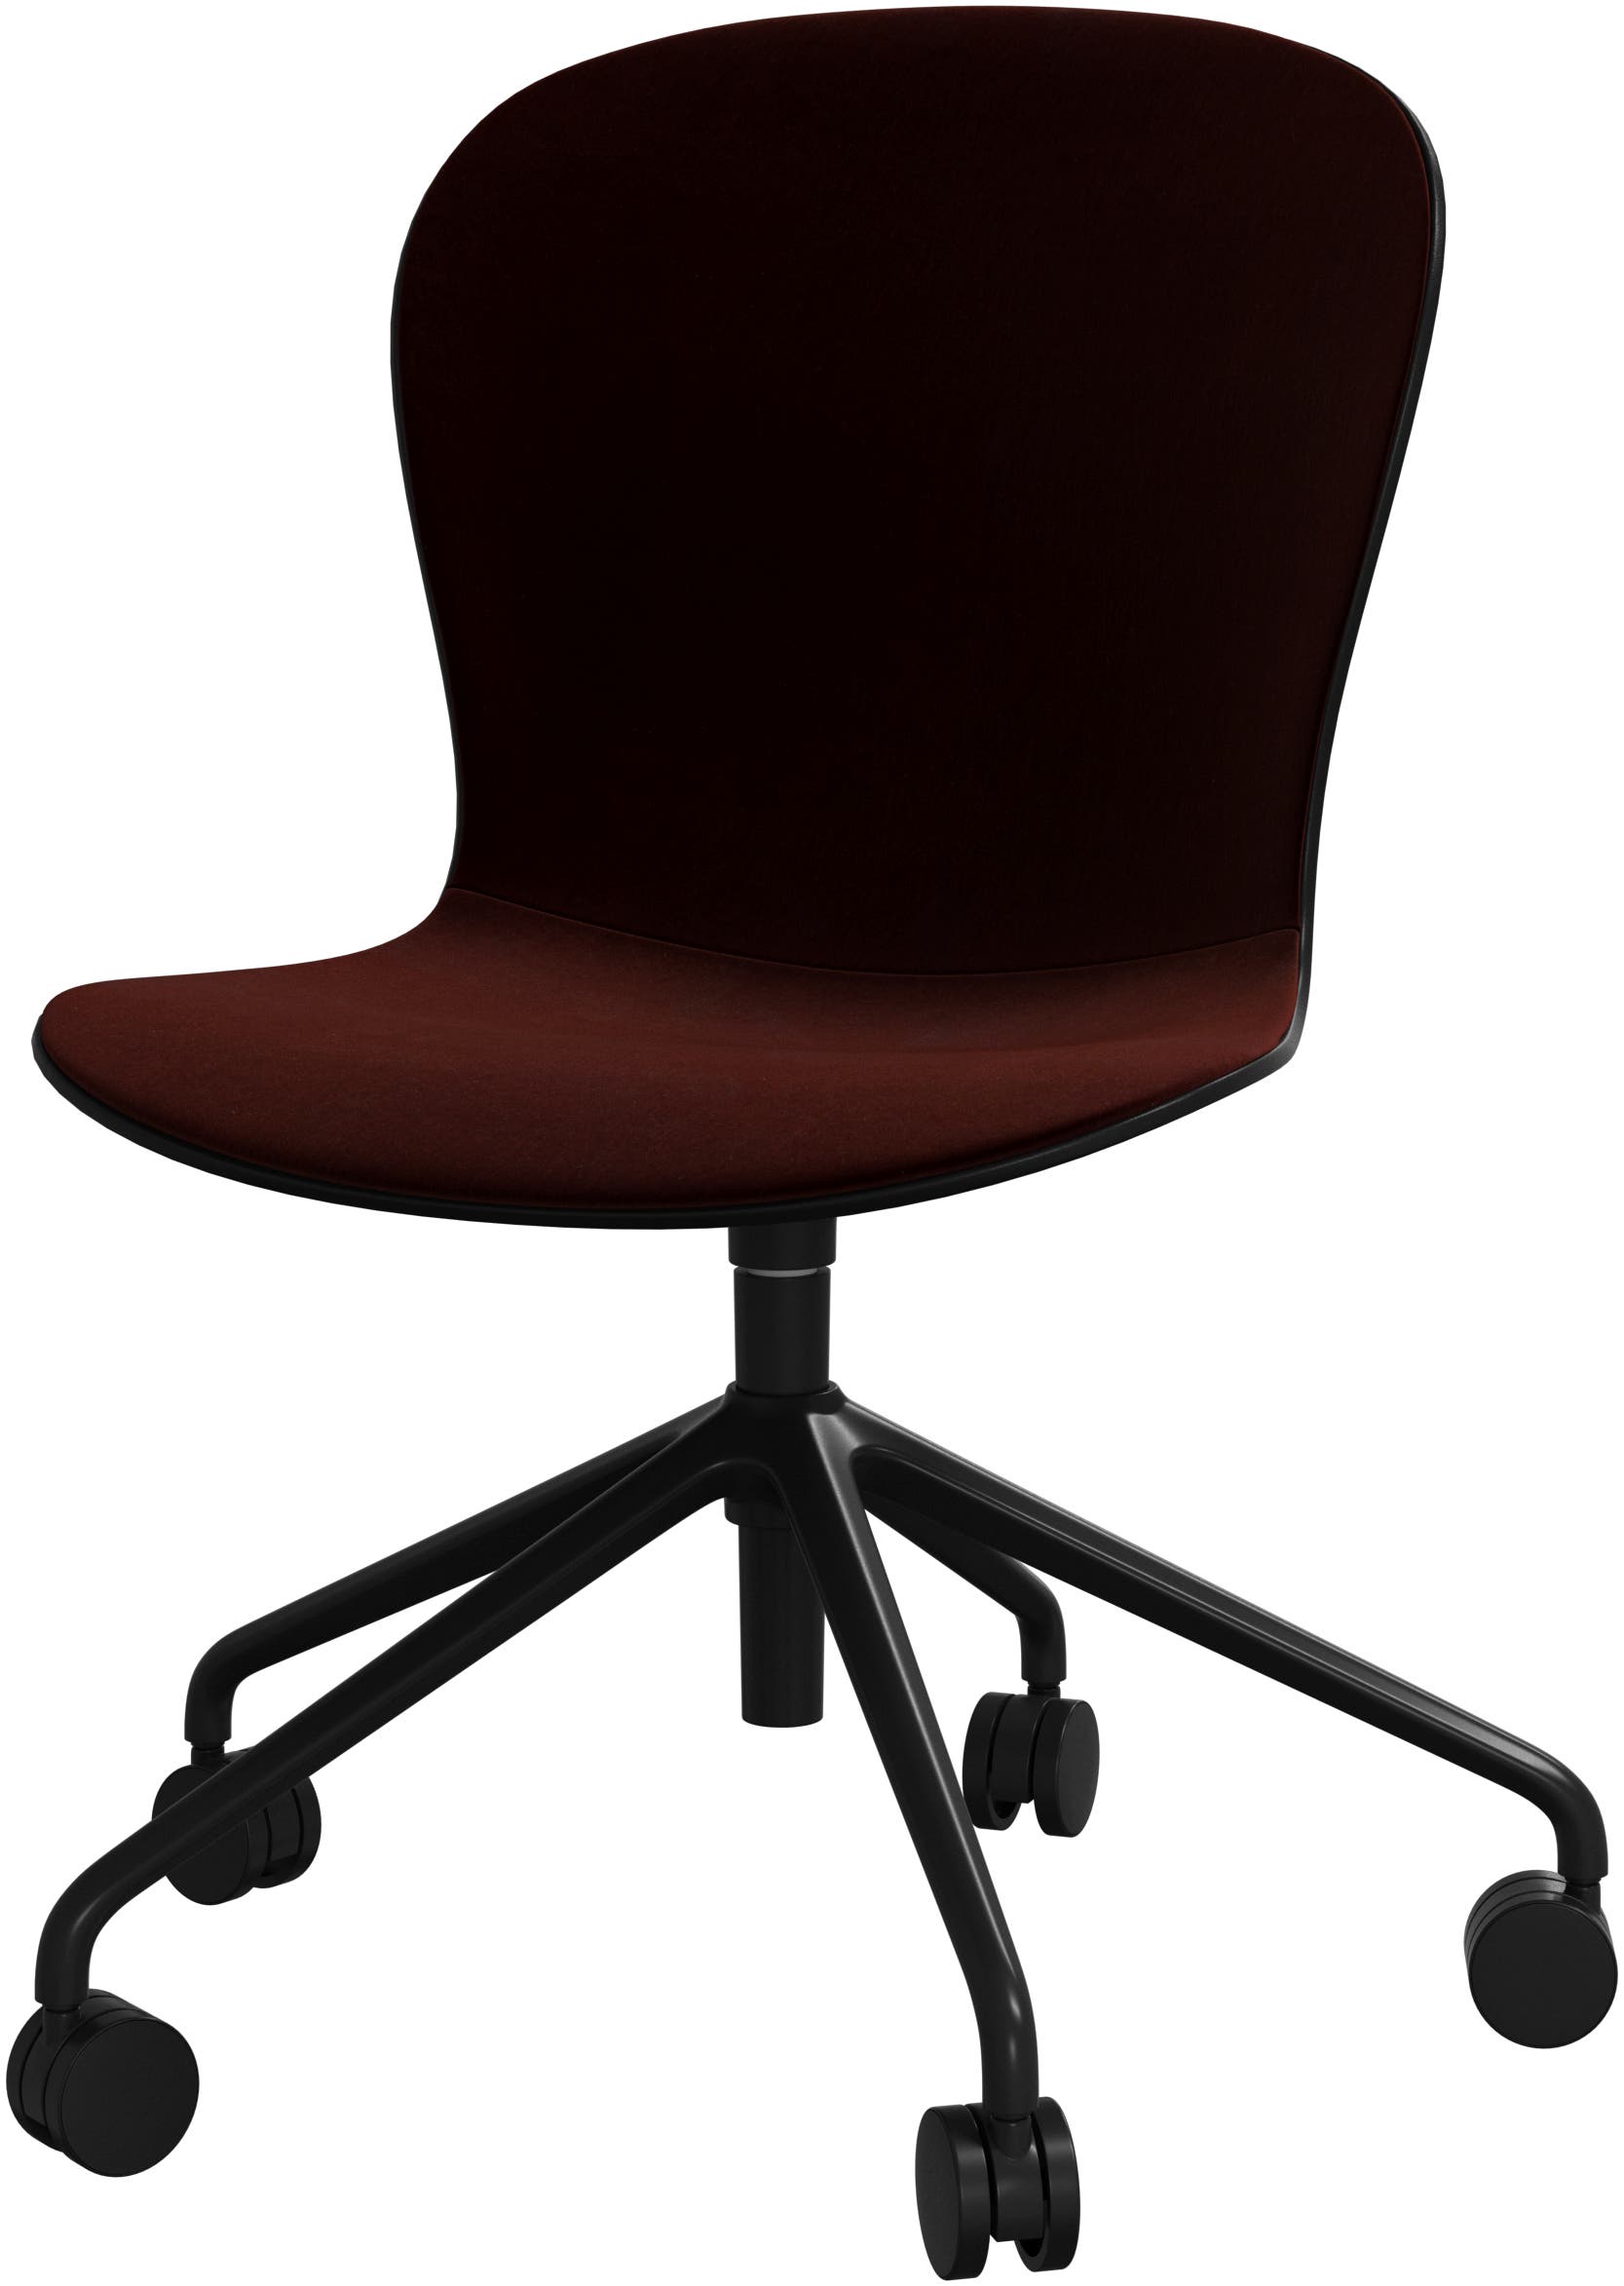 Adelaide-tuoli